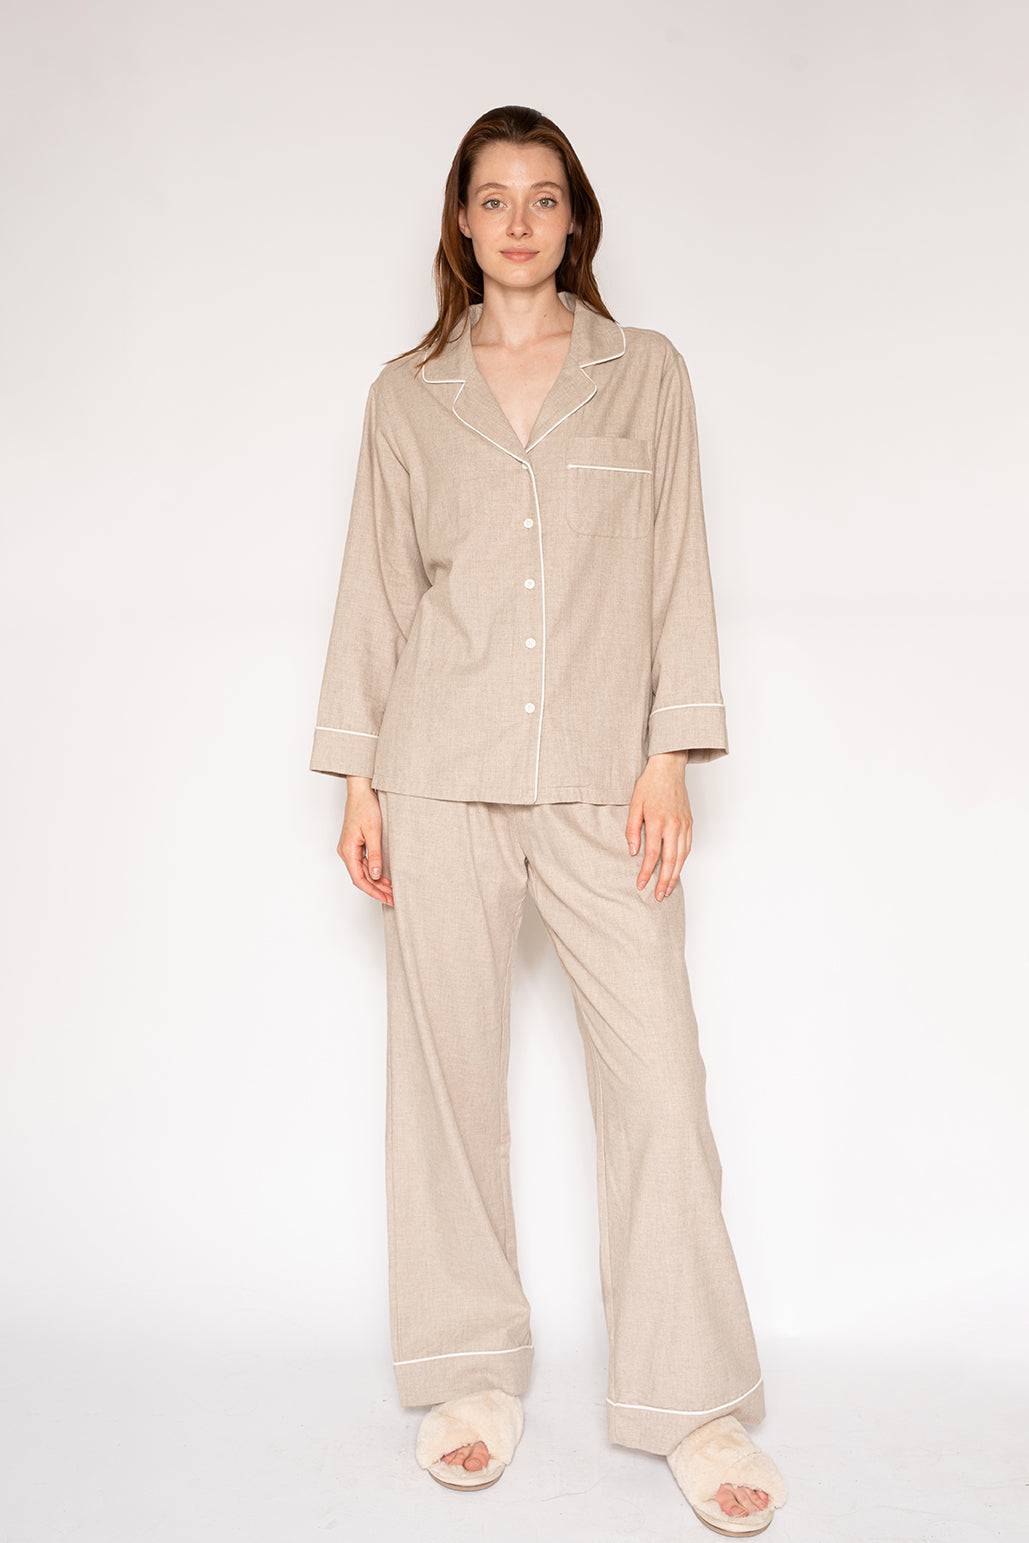 Women's Pajama Sets, Silk, Flannel & Cotton Pj Sets